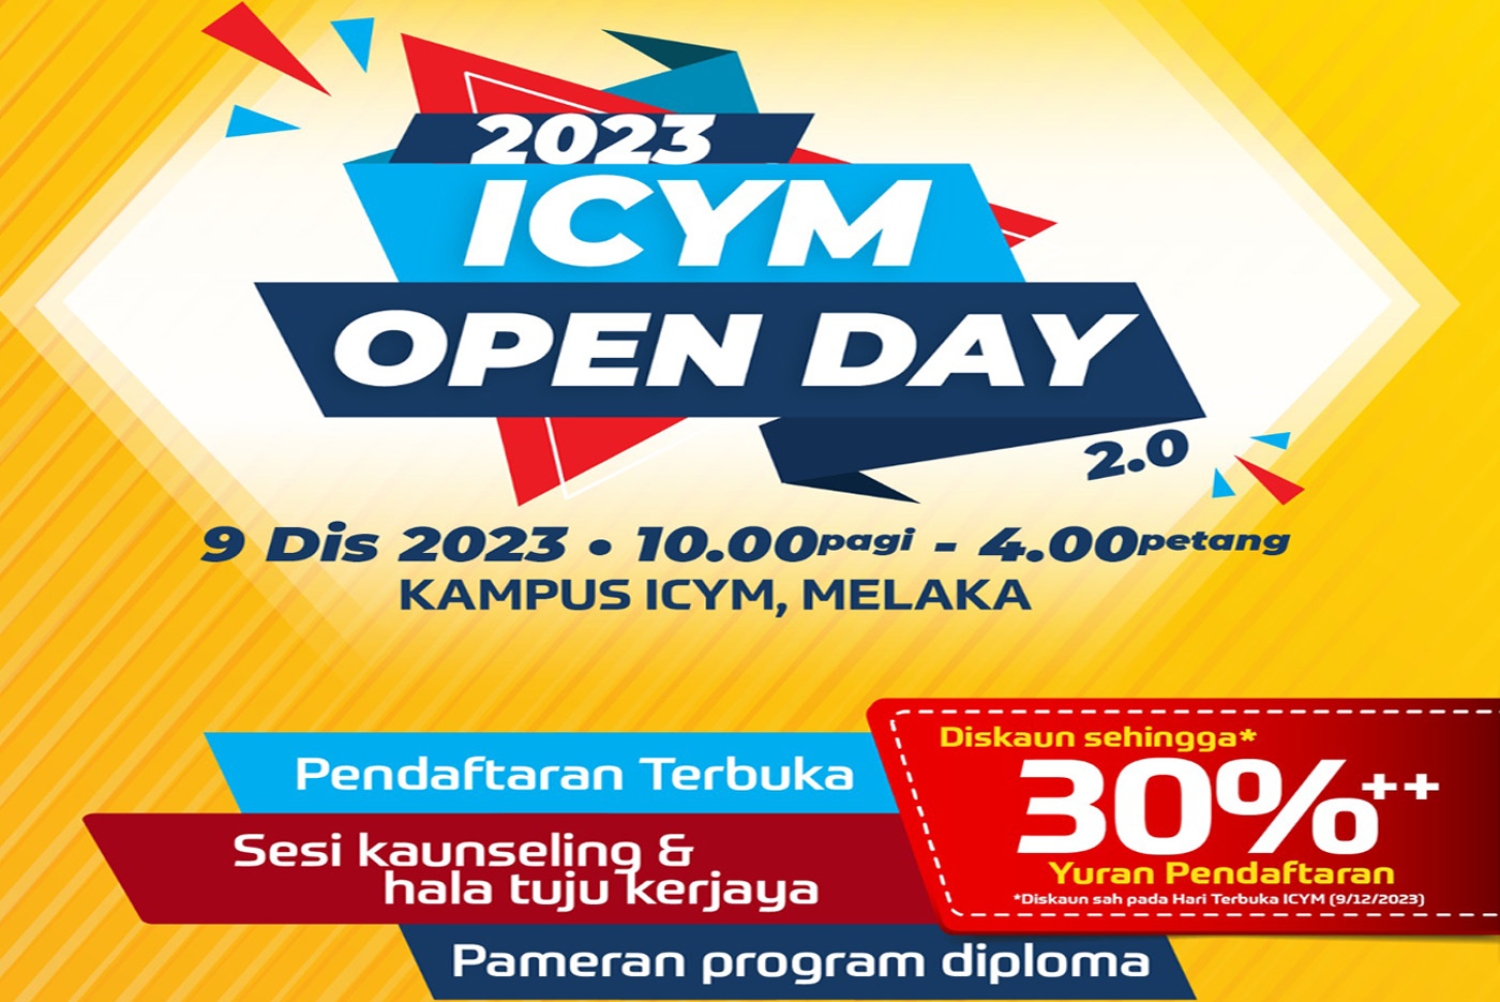 ICYM OPEN DAY – 9 DISEMBER 2023, Kampus ICYM Melaka